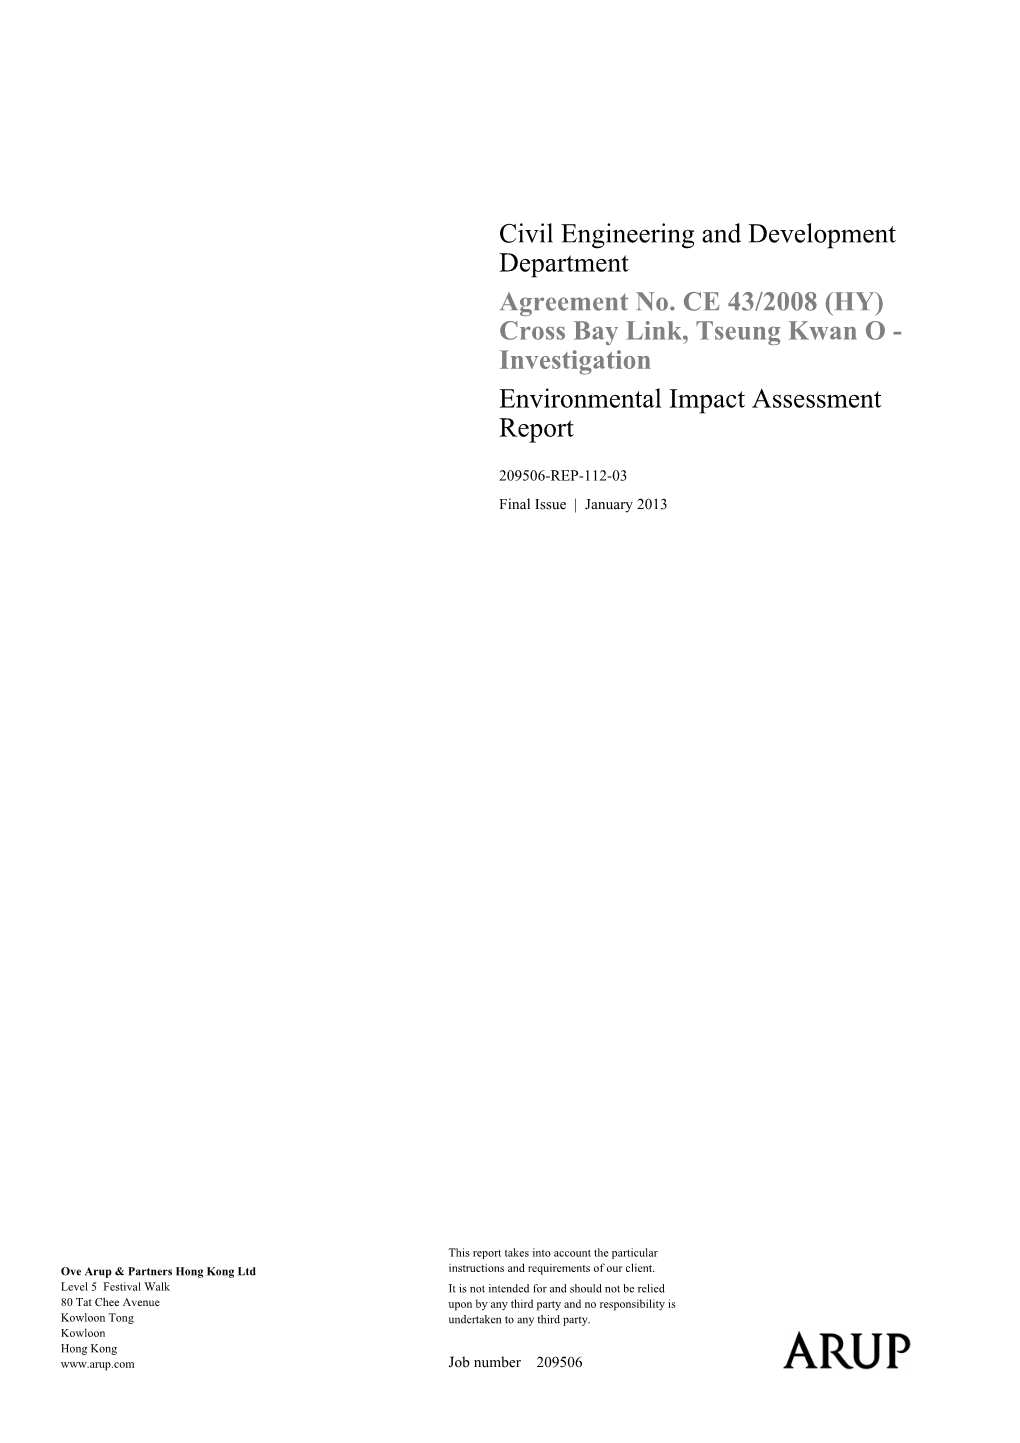 (HY) Cross Bay Link, Tseung Kwan O - Investigation Environmental Impact Assessment Report